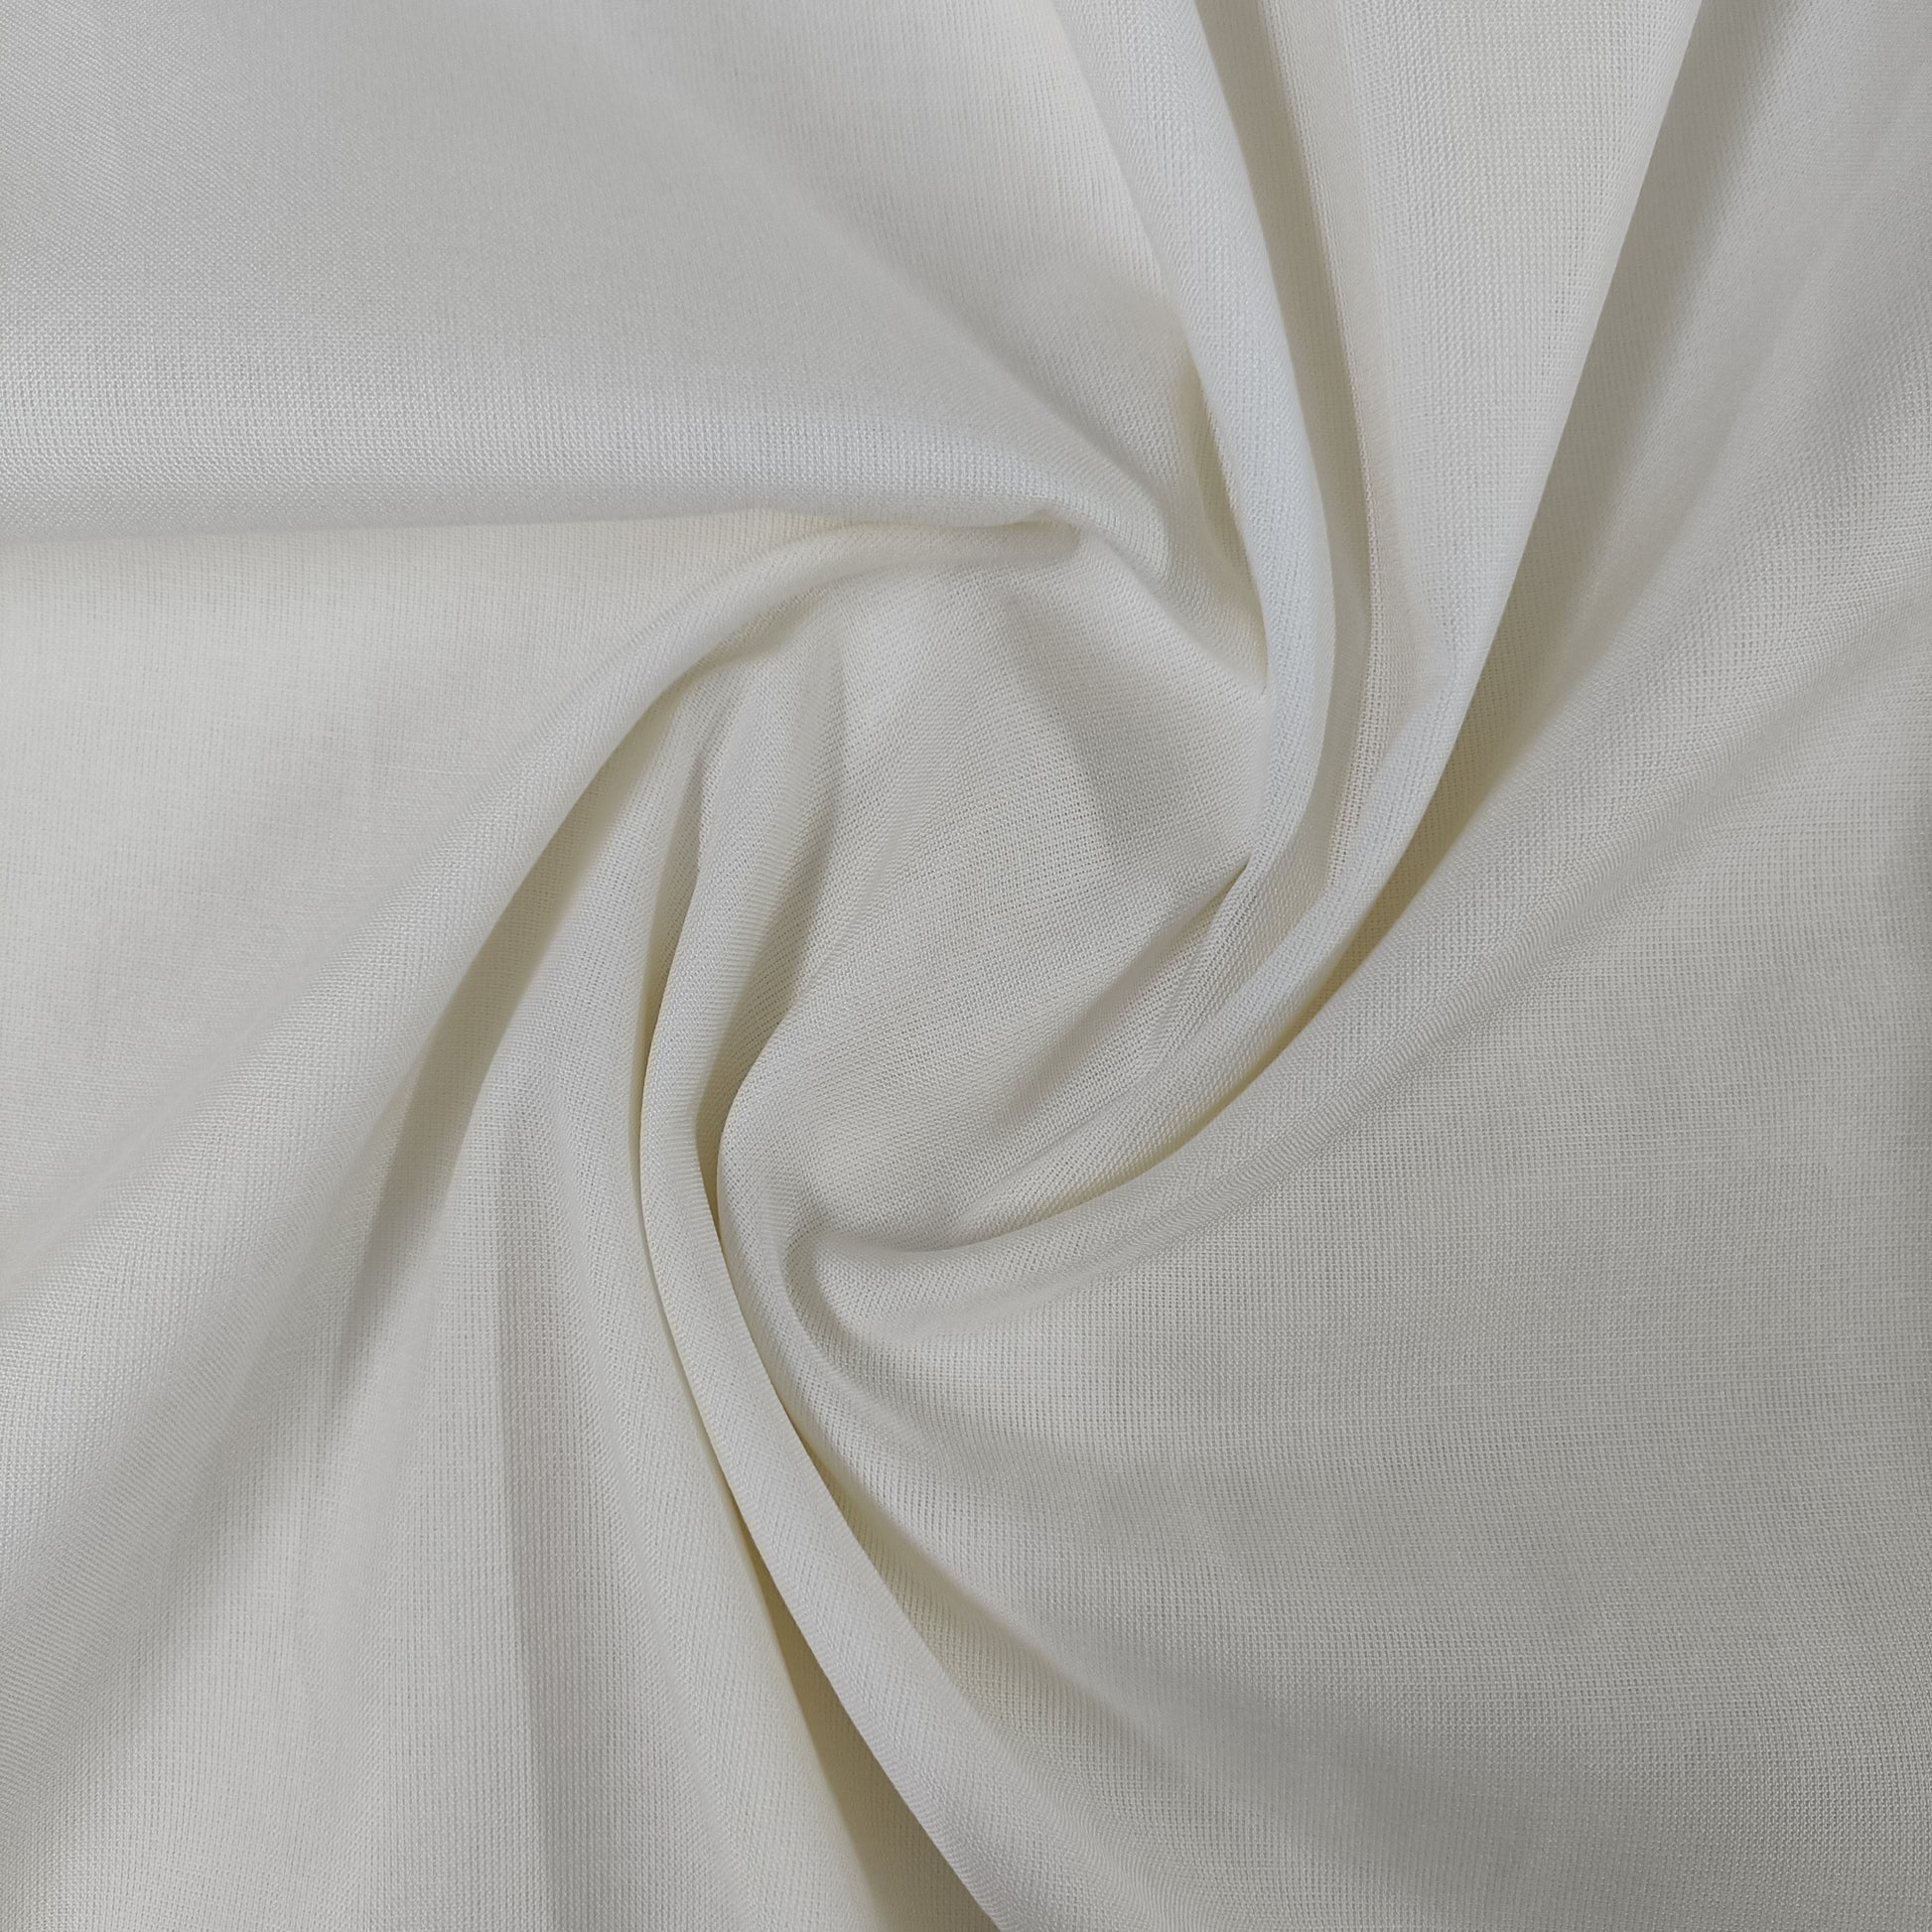 Off White 30x30/68x46-48" Dyeable Rayon Fabric - TradeUNO